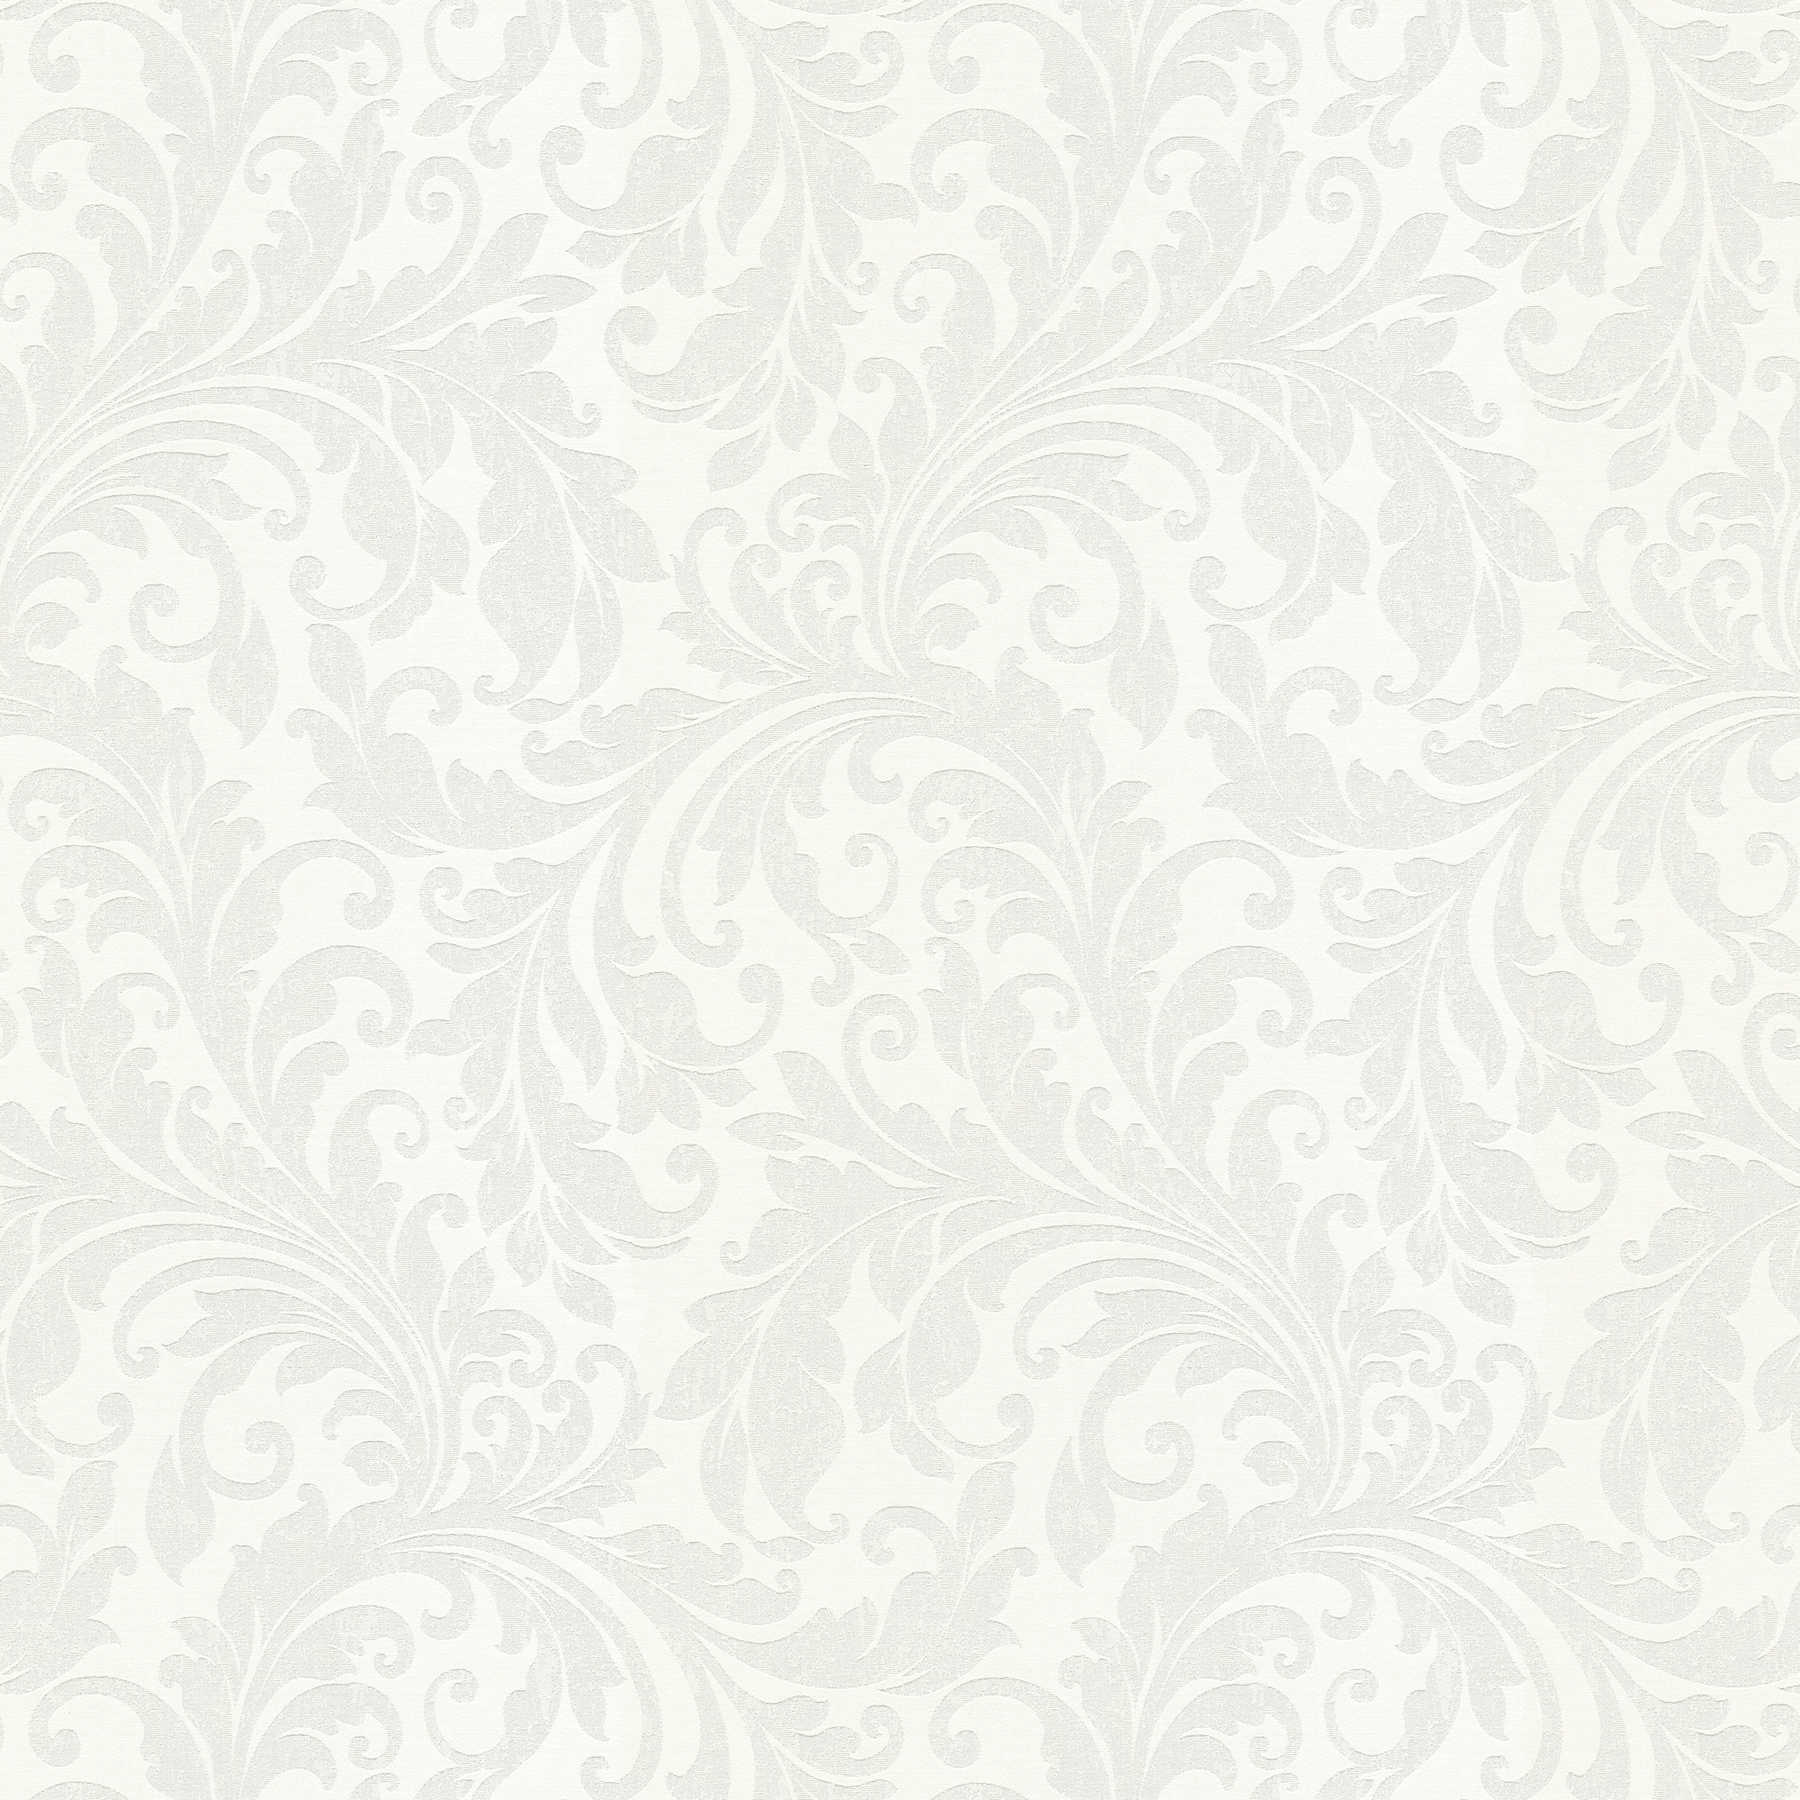 Tone on tone pattern wallpaper floral ornaments - grey, white
